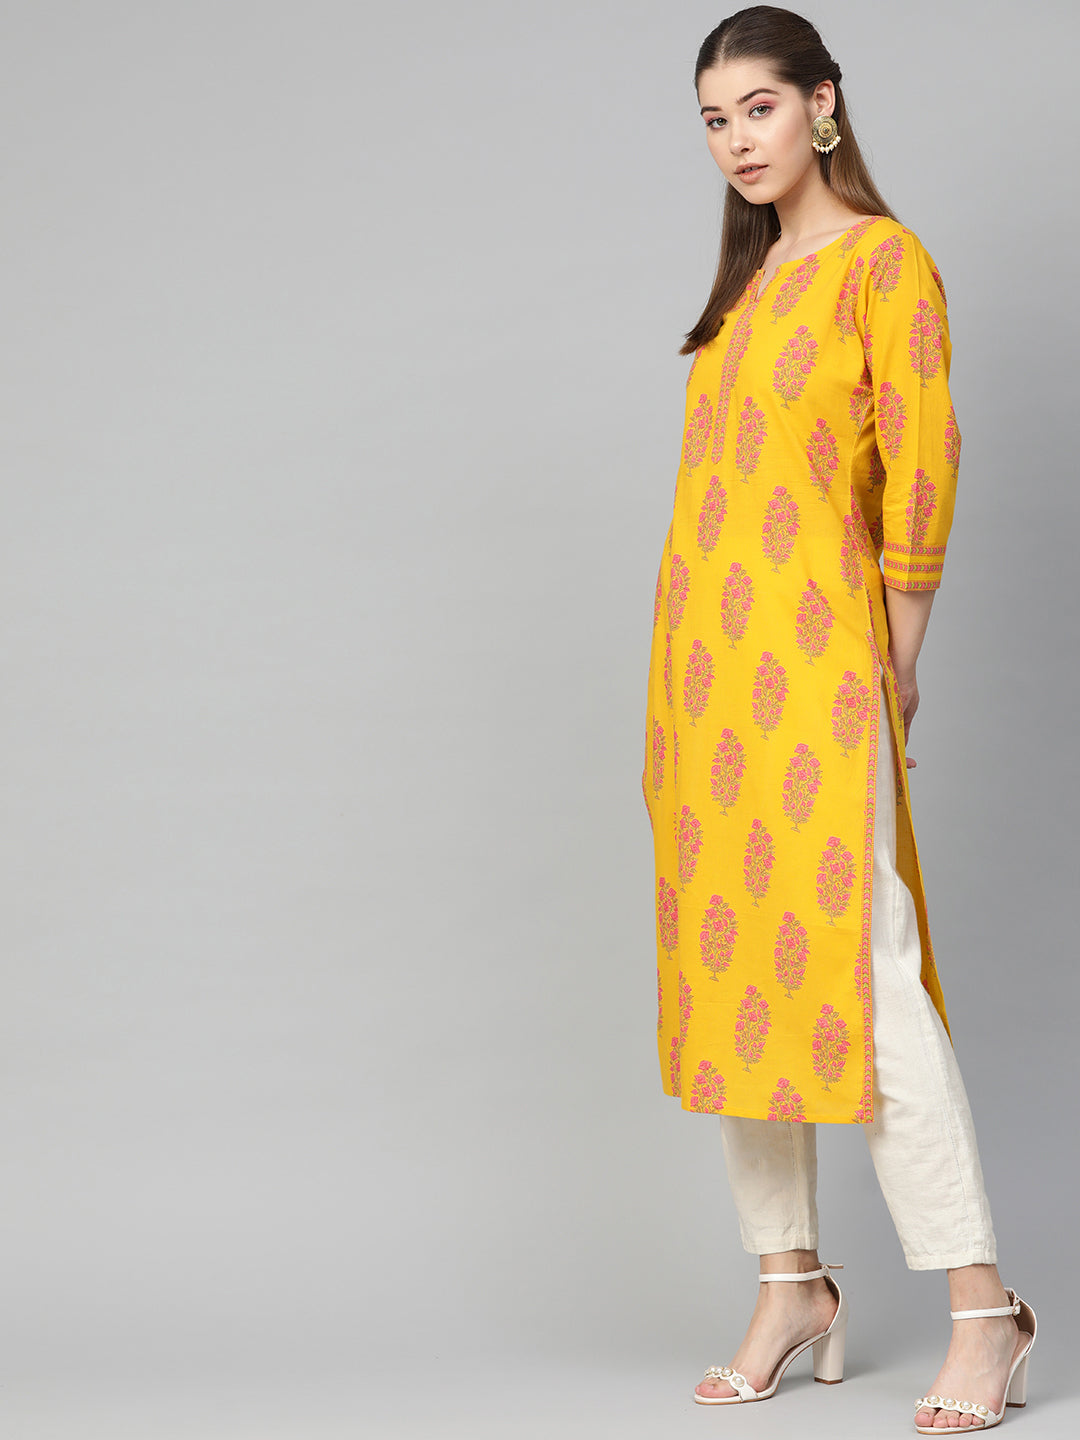 Myshka Women's Yellow Cotton Printed 3/4 Sleeve Round Neck Casual Kurta